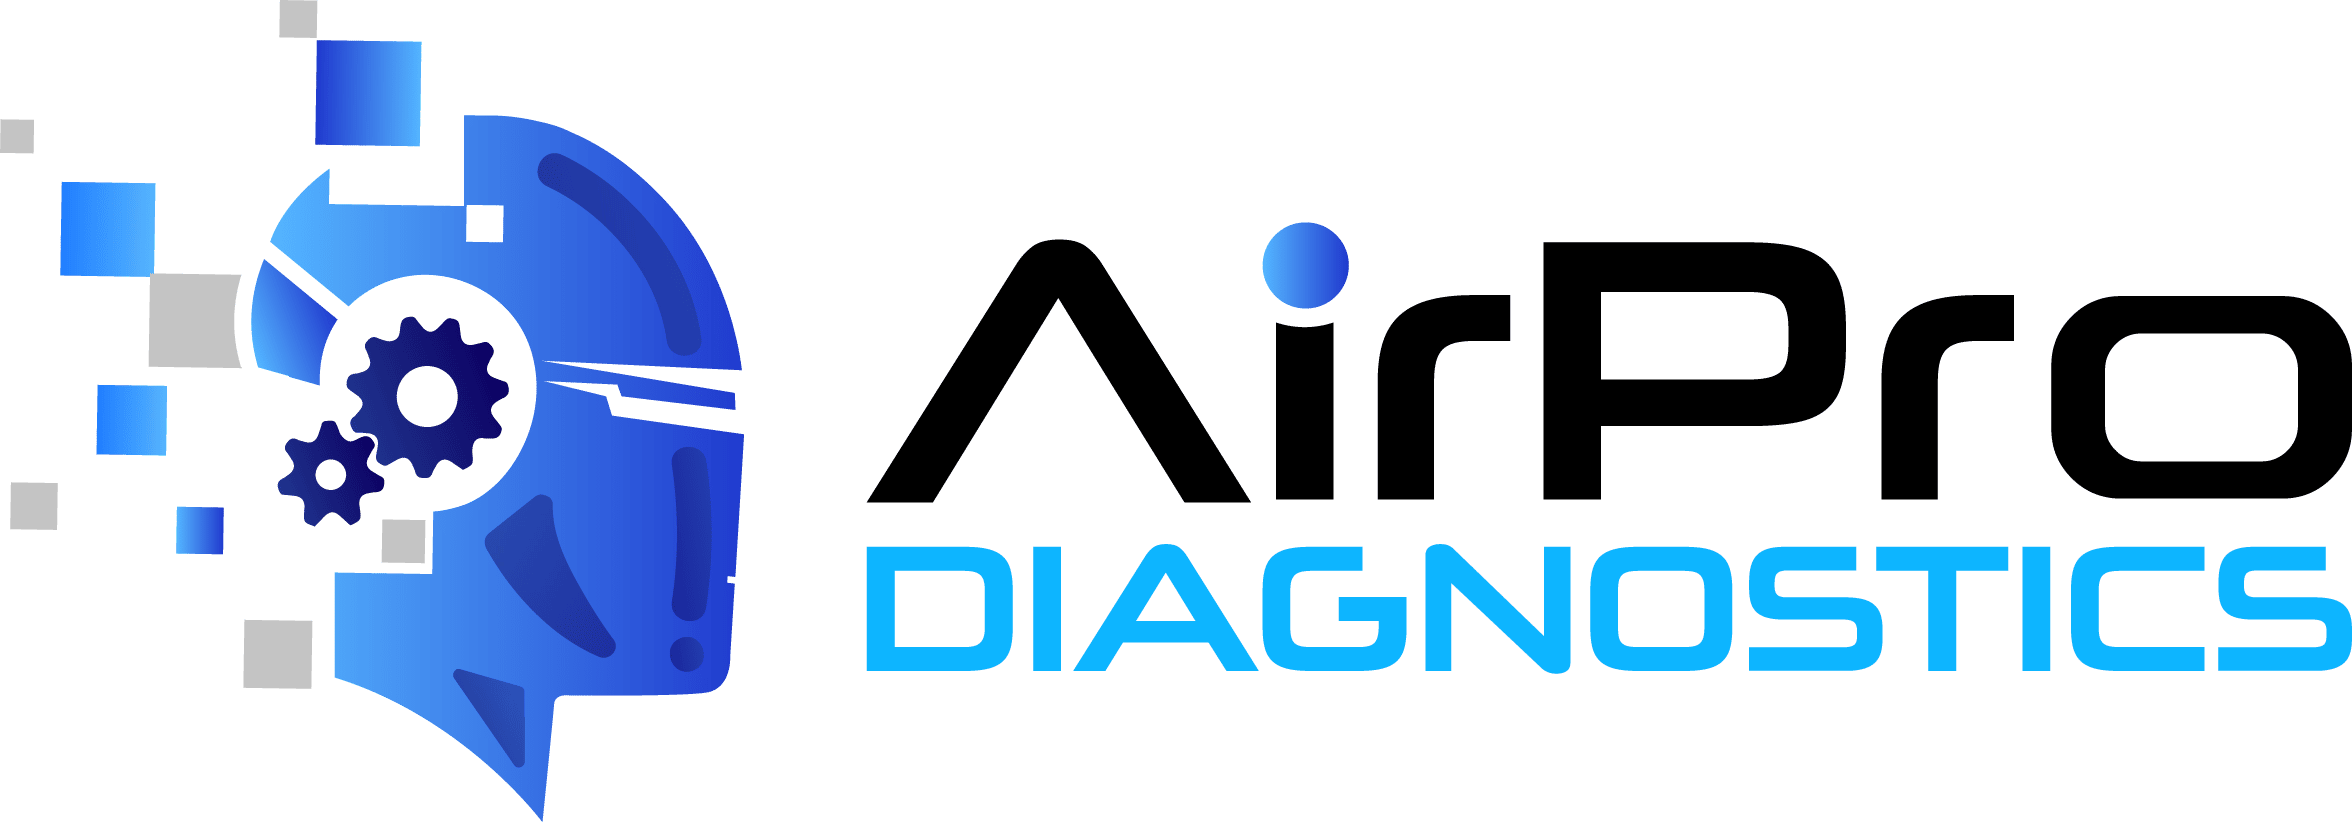 AirPro Diagnostics | Remote Diagnostics & ADAS Scanning | July 2017 | AirPro Diagnostics | Remote Diagnostics & ADAS Scanning